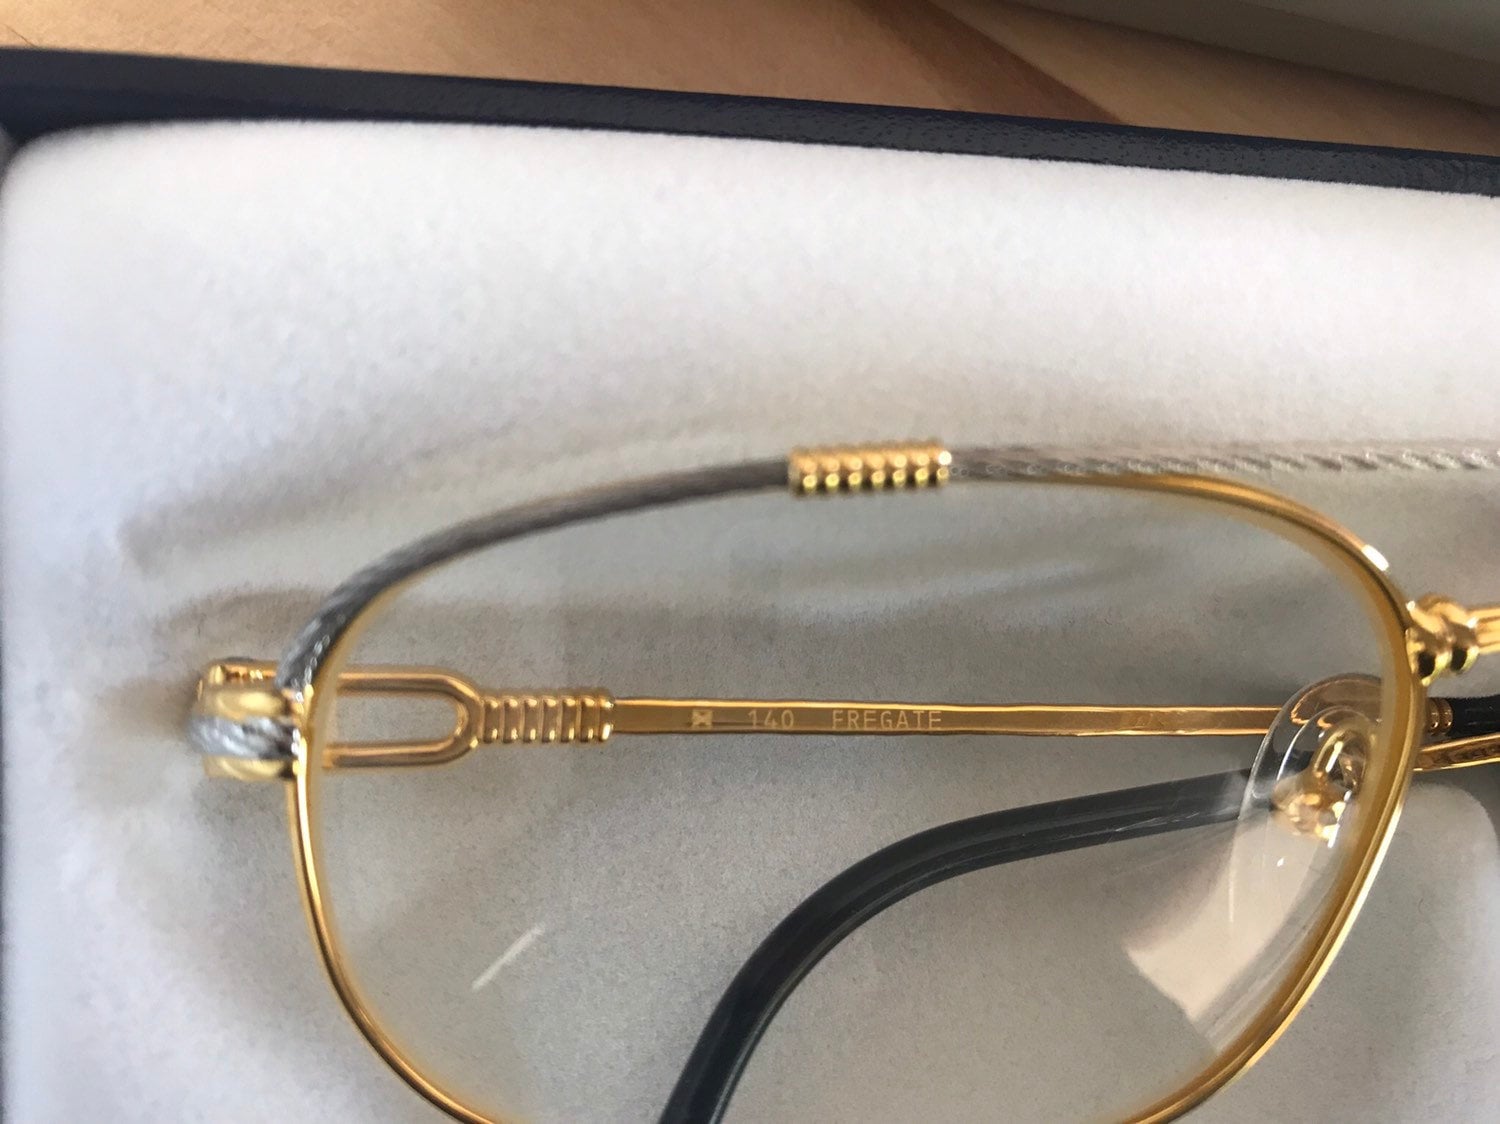 Fred Fregate Vintage Eyeglasses / Luxury Glasses Gold Plated / - Etsy